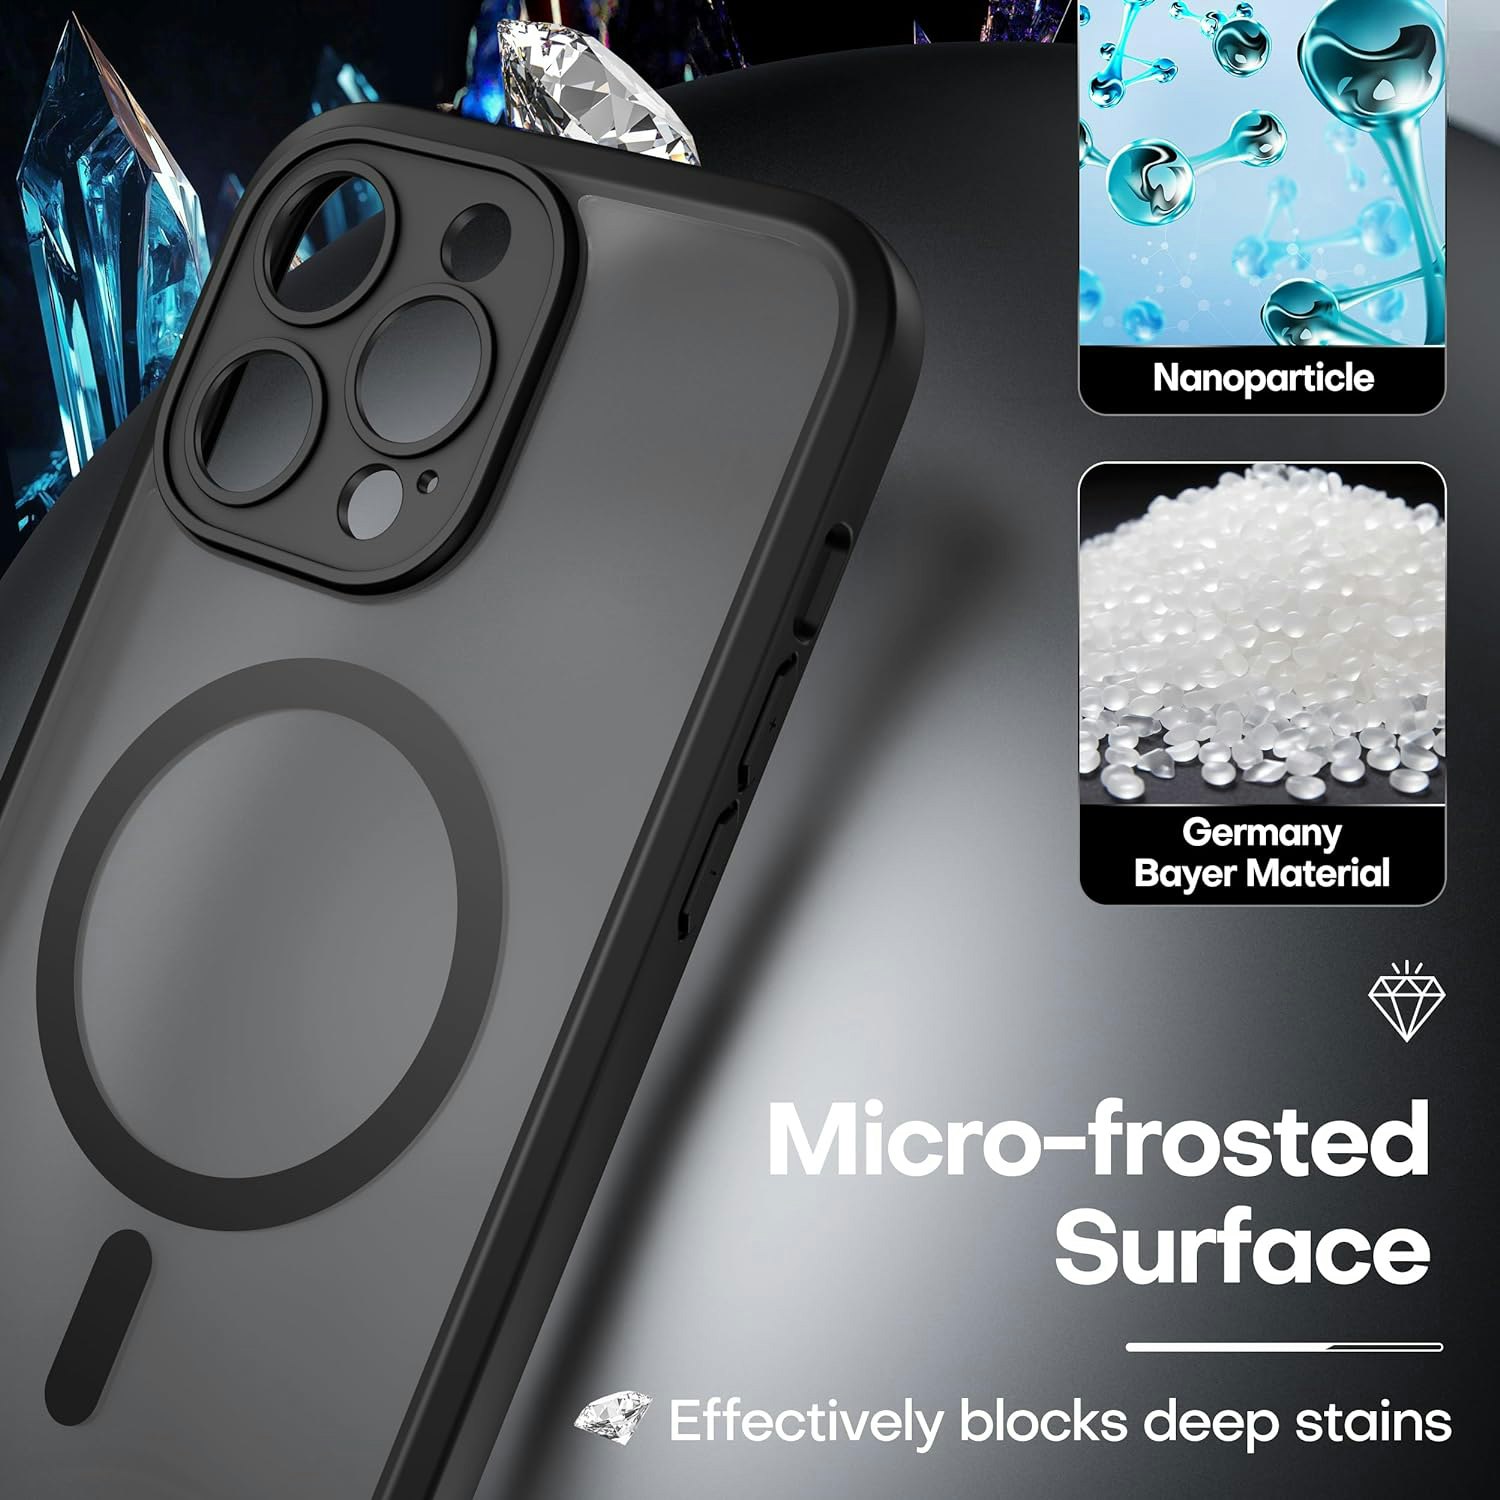 iPhone 13 MagSafe silikonskal i svart färg